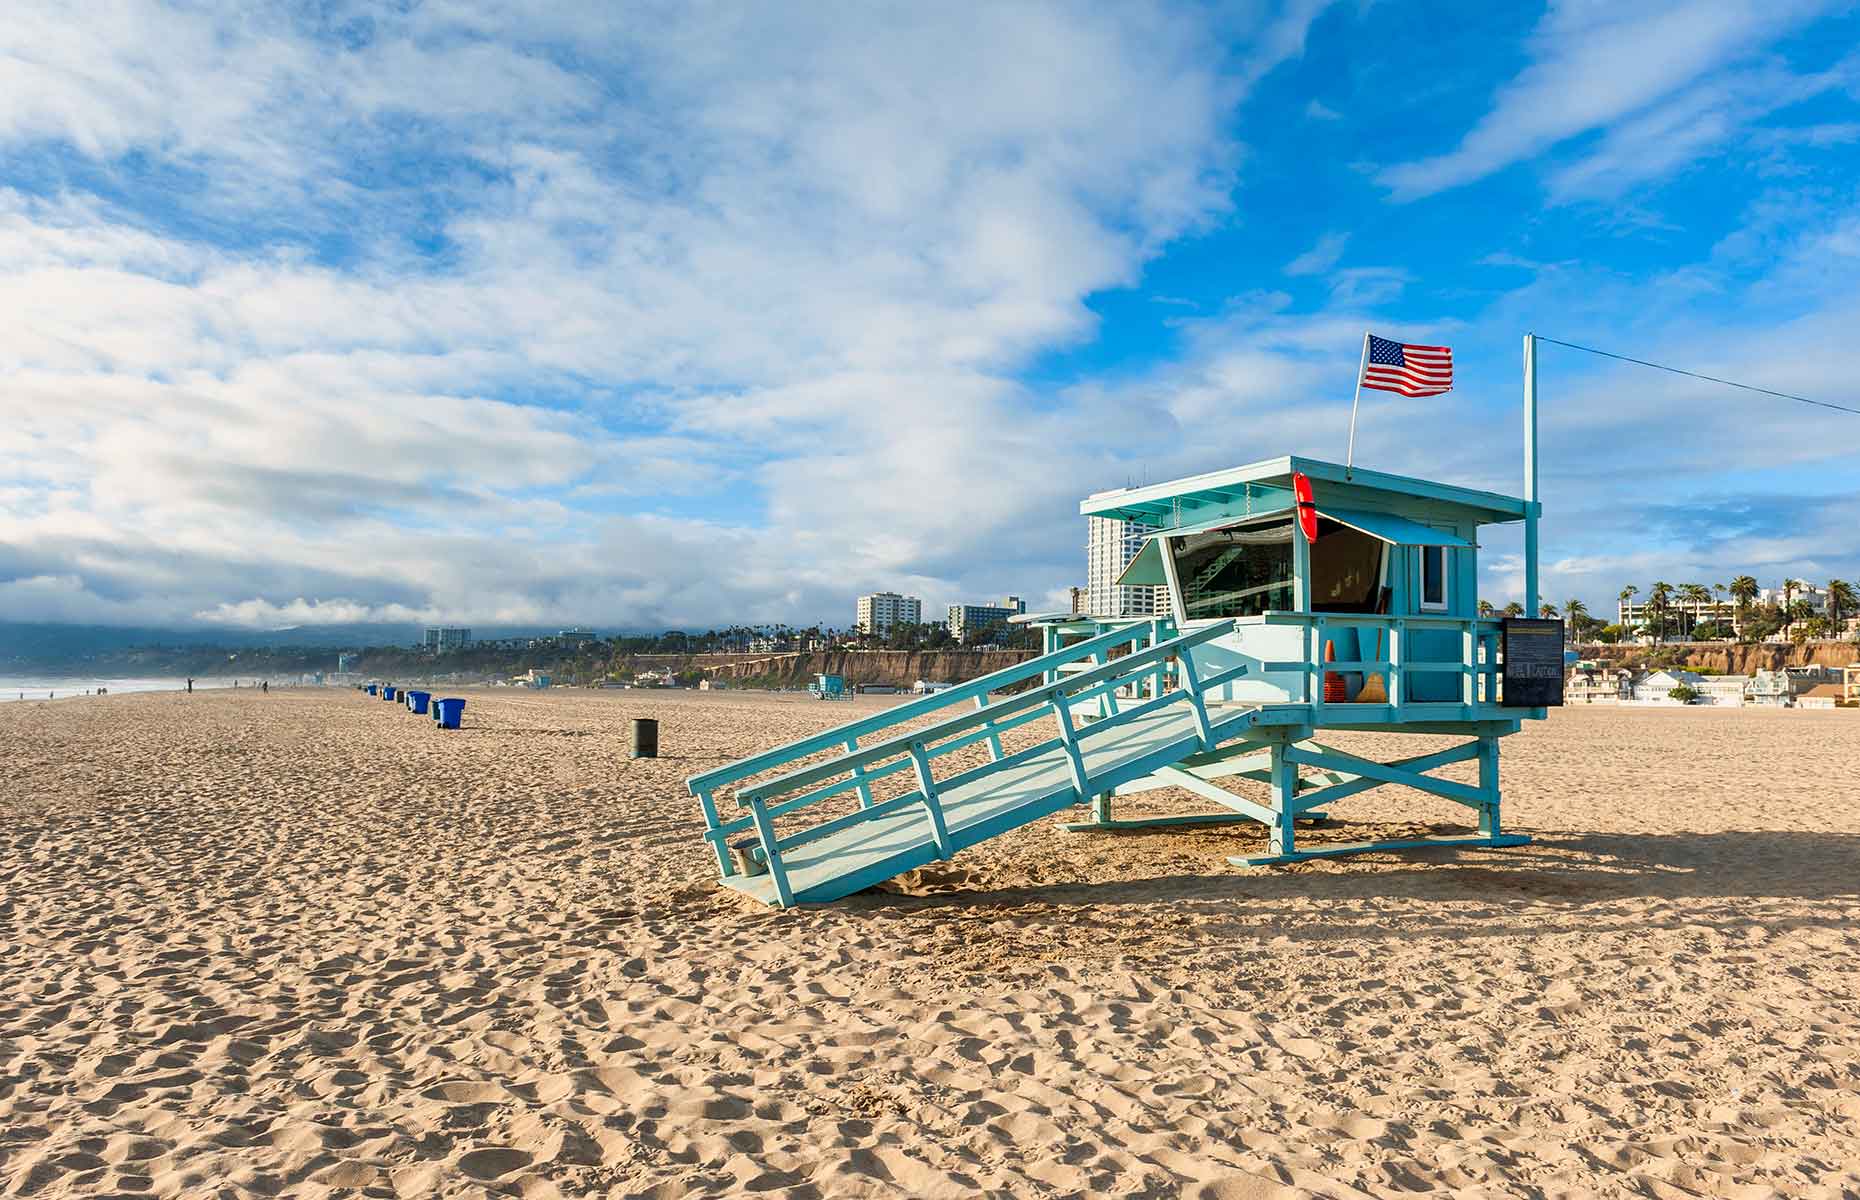 Santa Monica beach (Image: Allard One/Shutterstock)